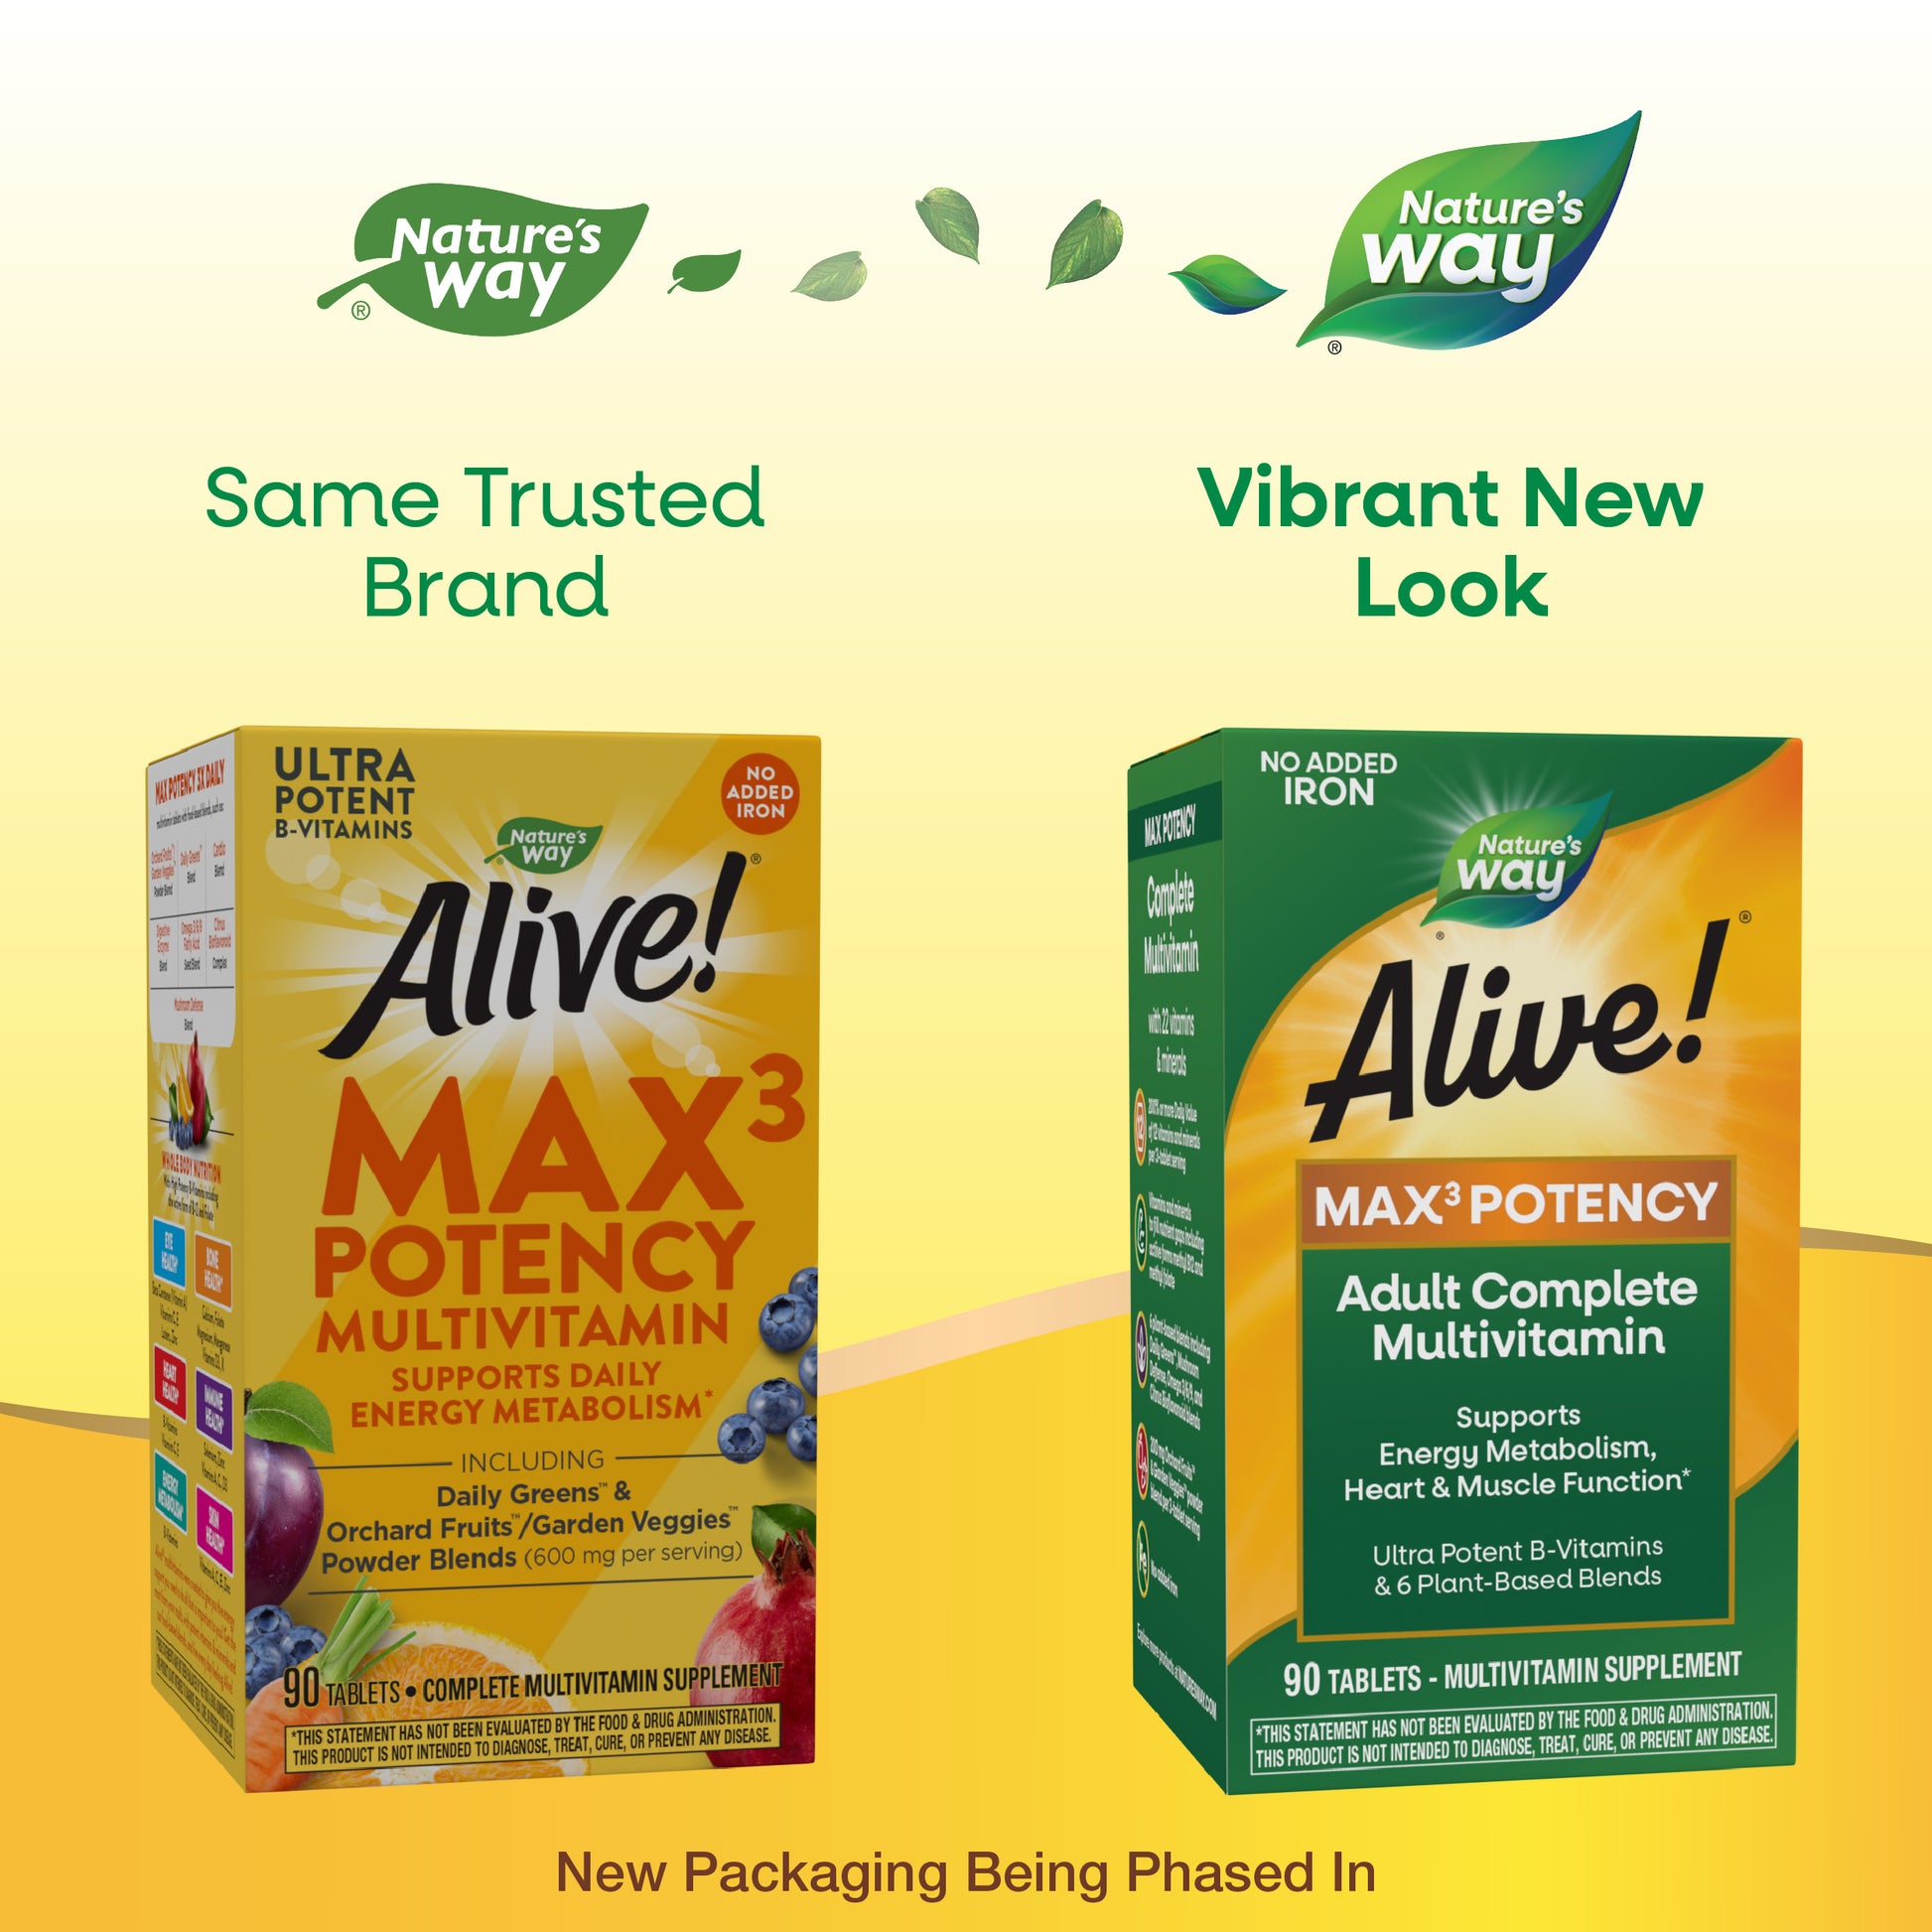 Nature's Way® | Alive!® Max3 Daily Multivitamin (No Iron)